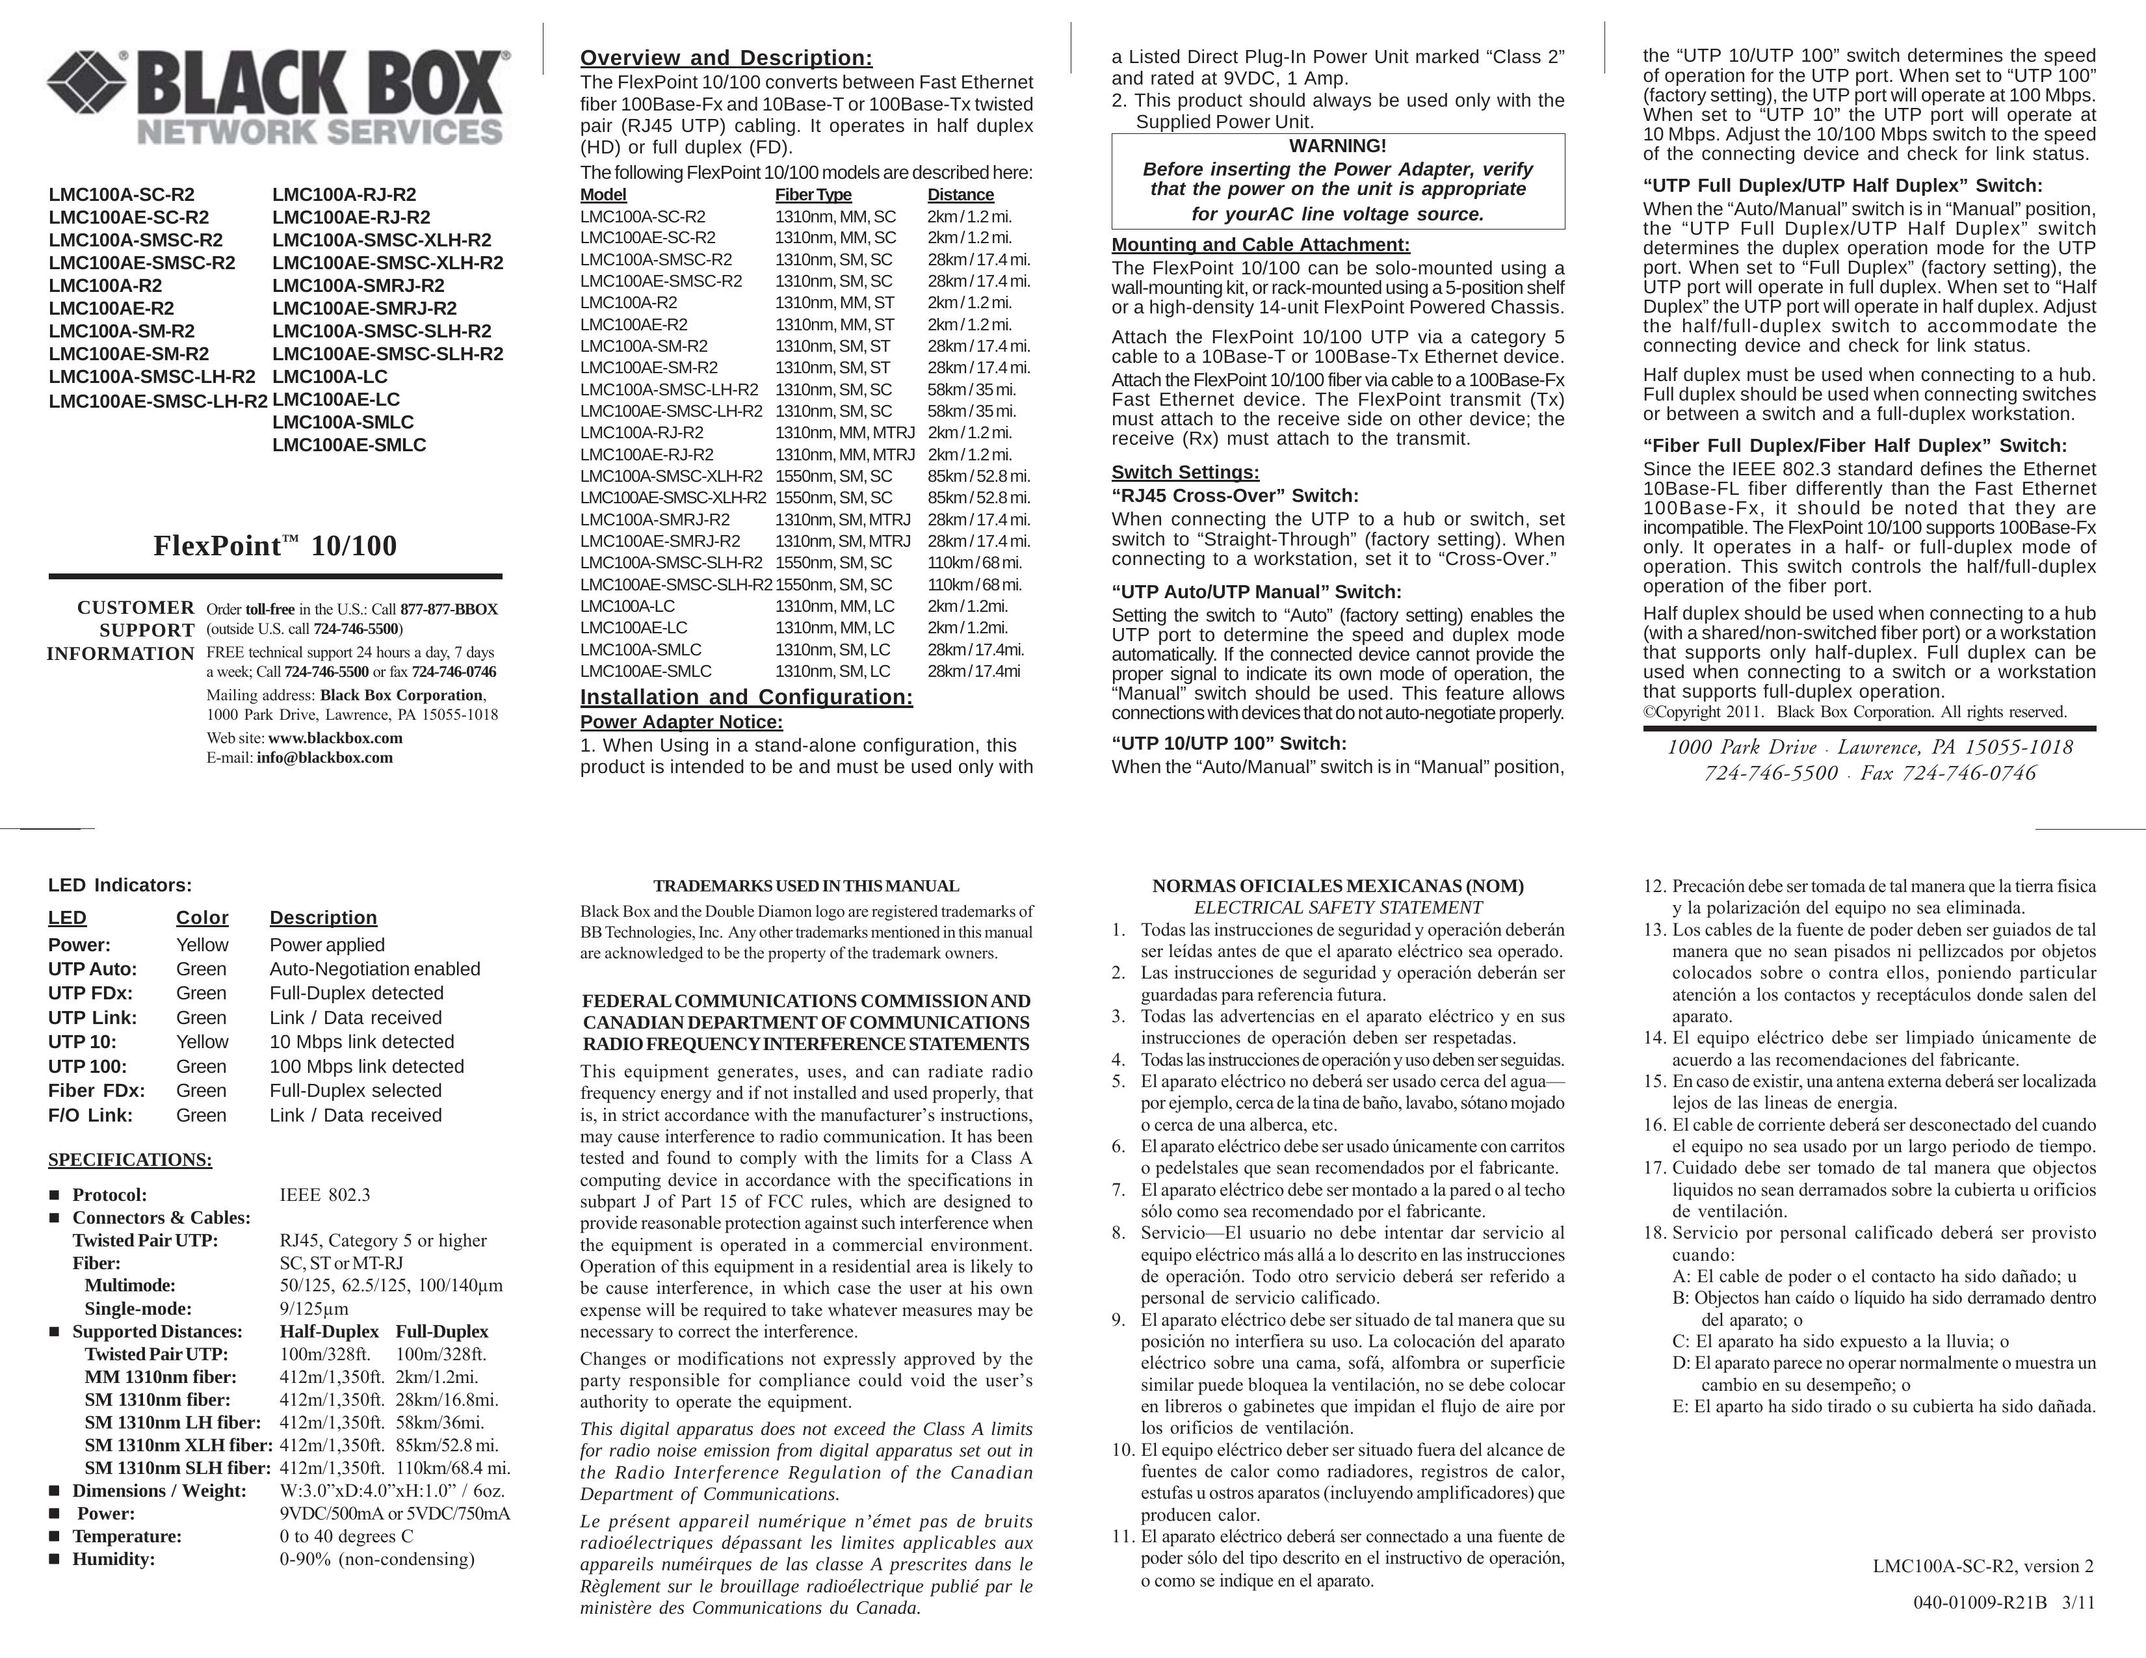 Black Box LMC100A-SMRJ-R2 Network Cables User Manual